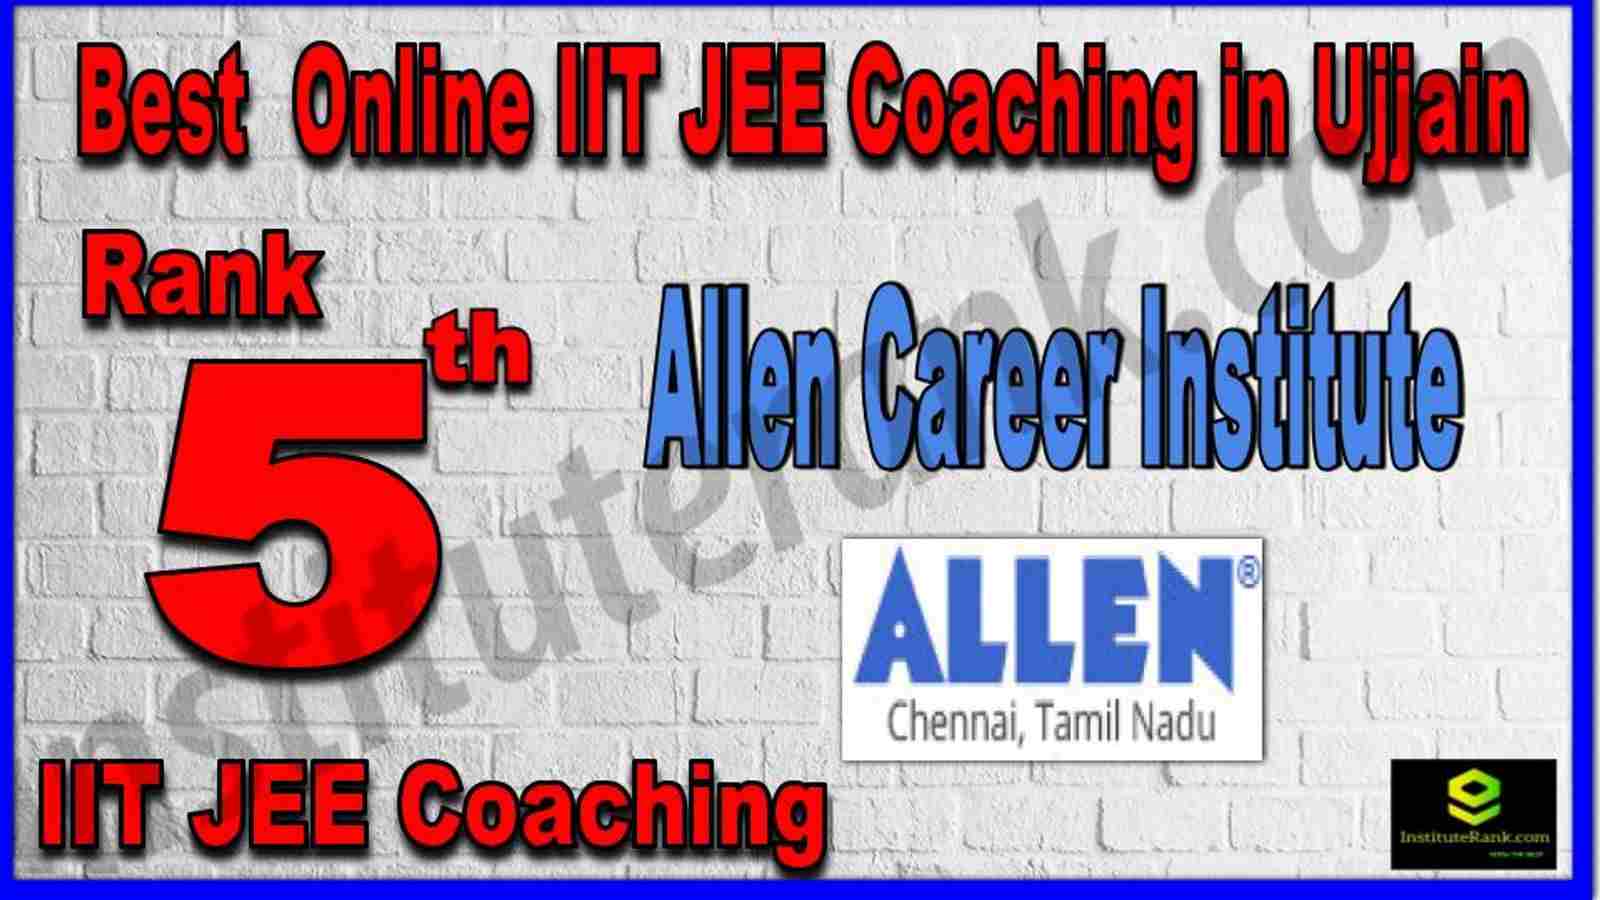 Rank 5th Best Online IIT-JEE Coaching in Ujjain